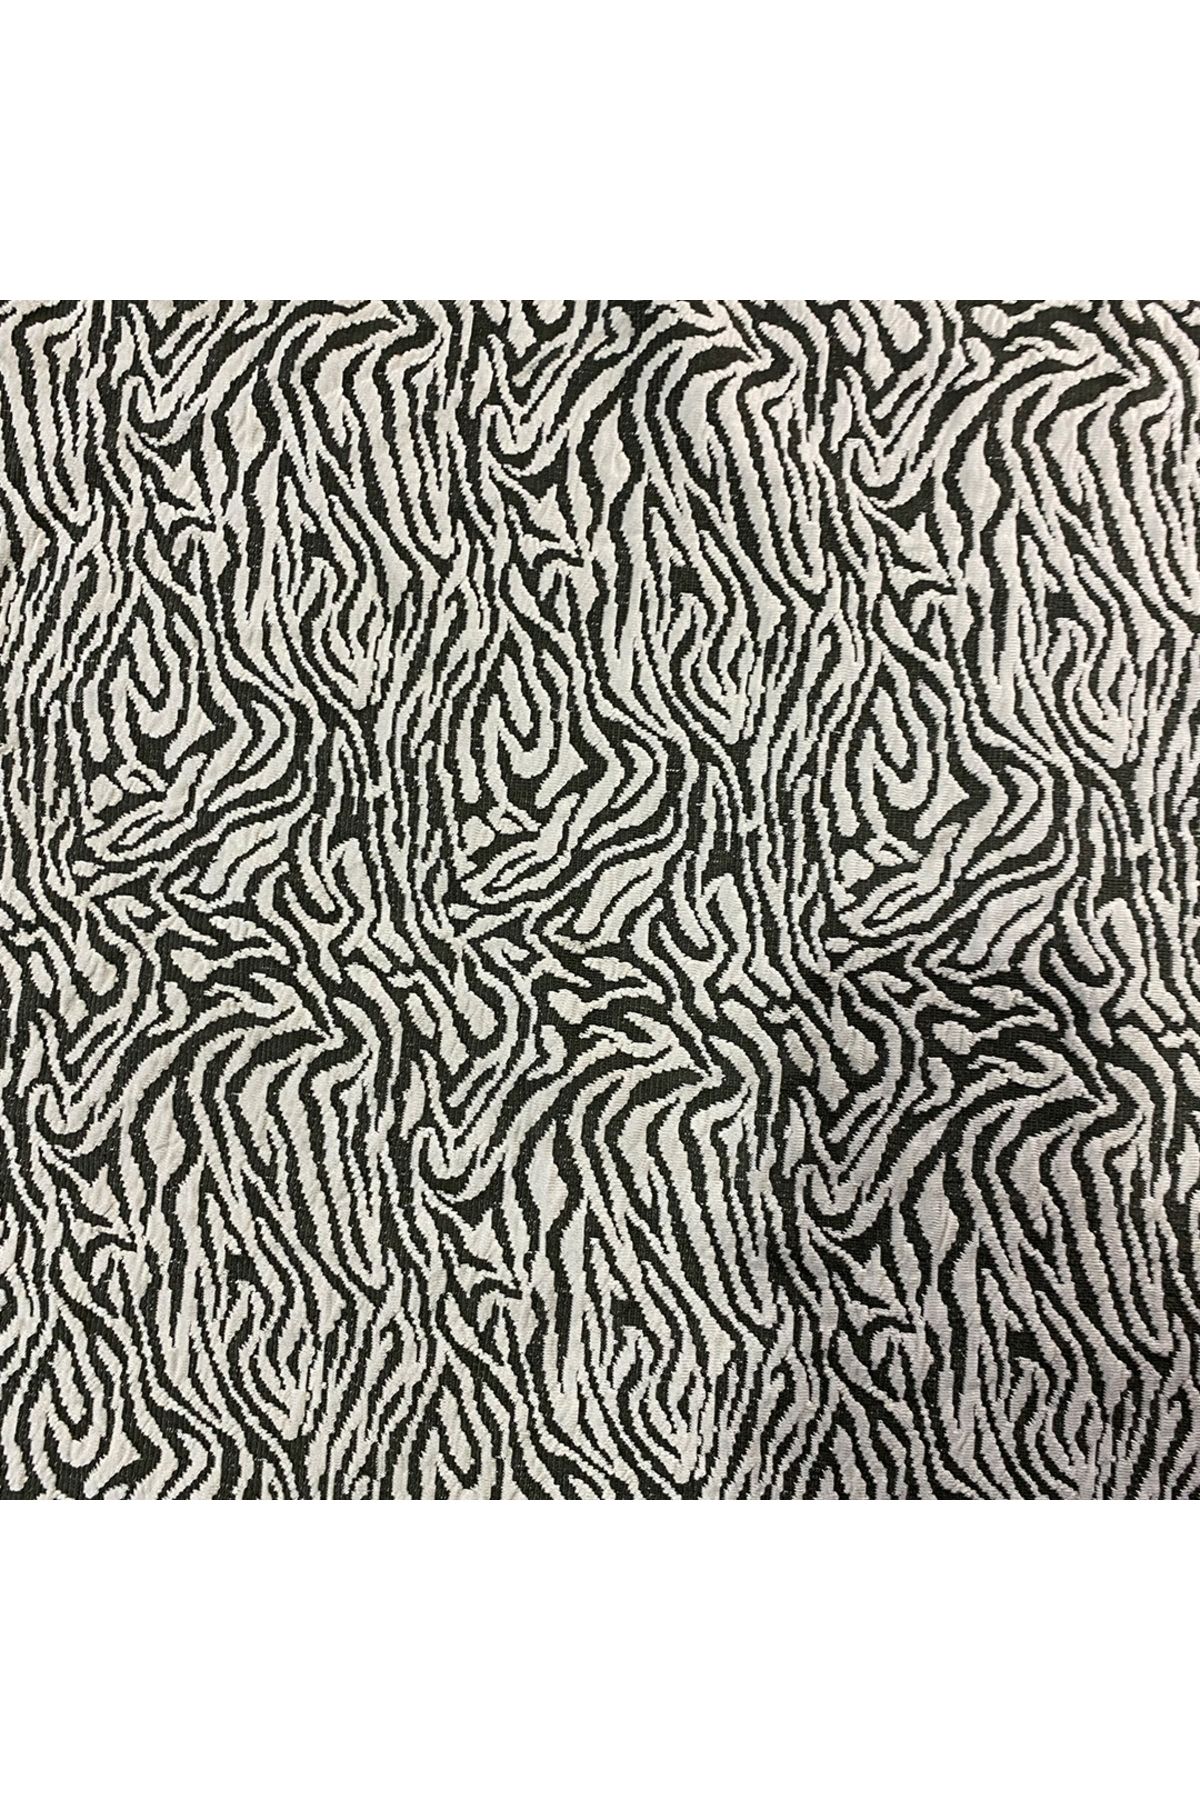 DORE Pamuklu Küçük Zebra Desen Jakarlı Kumaş